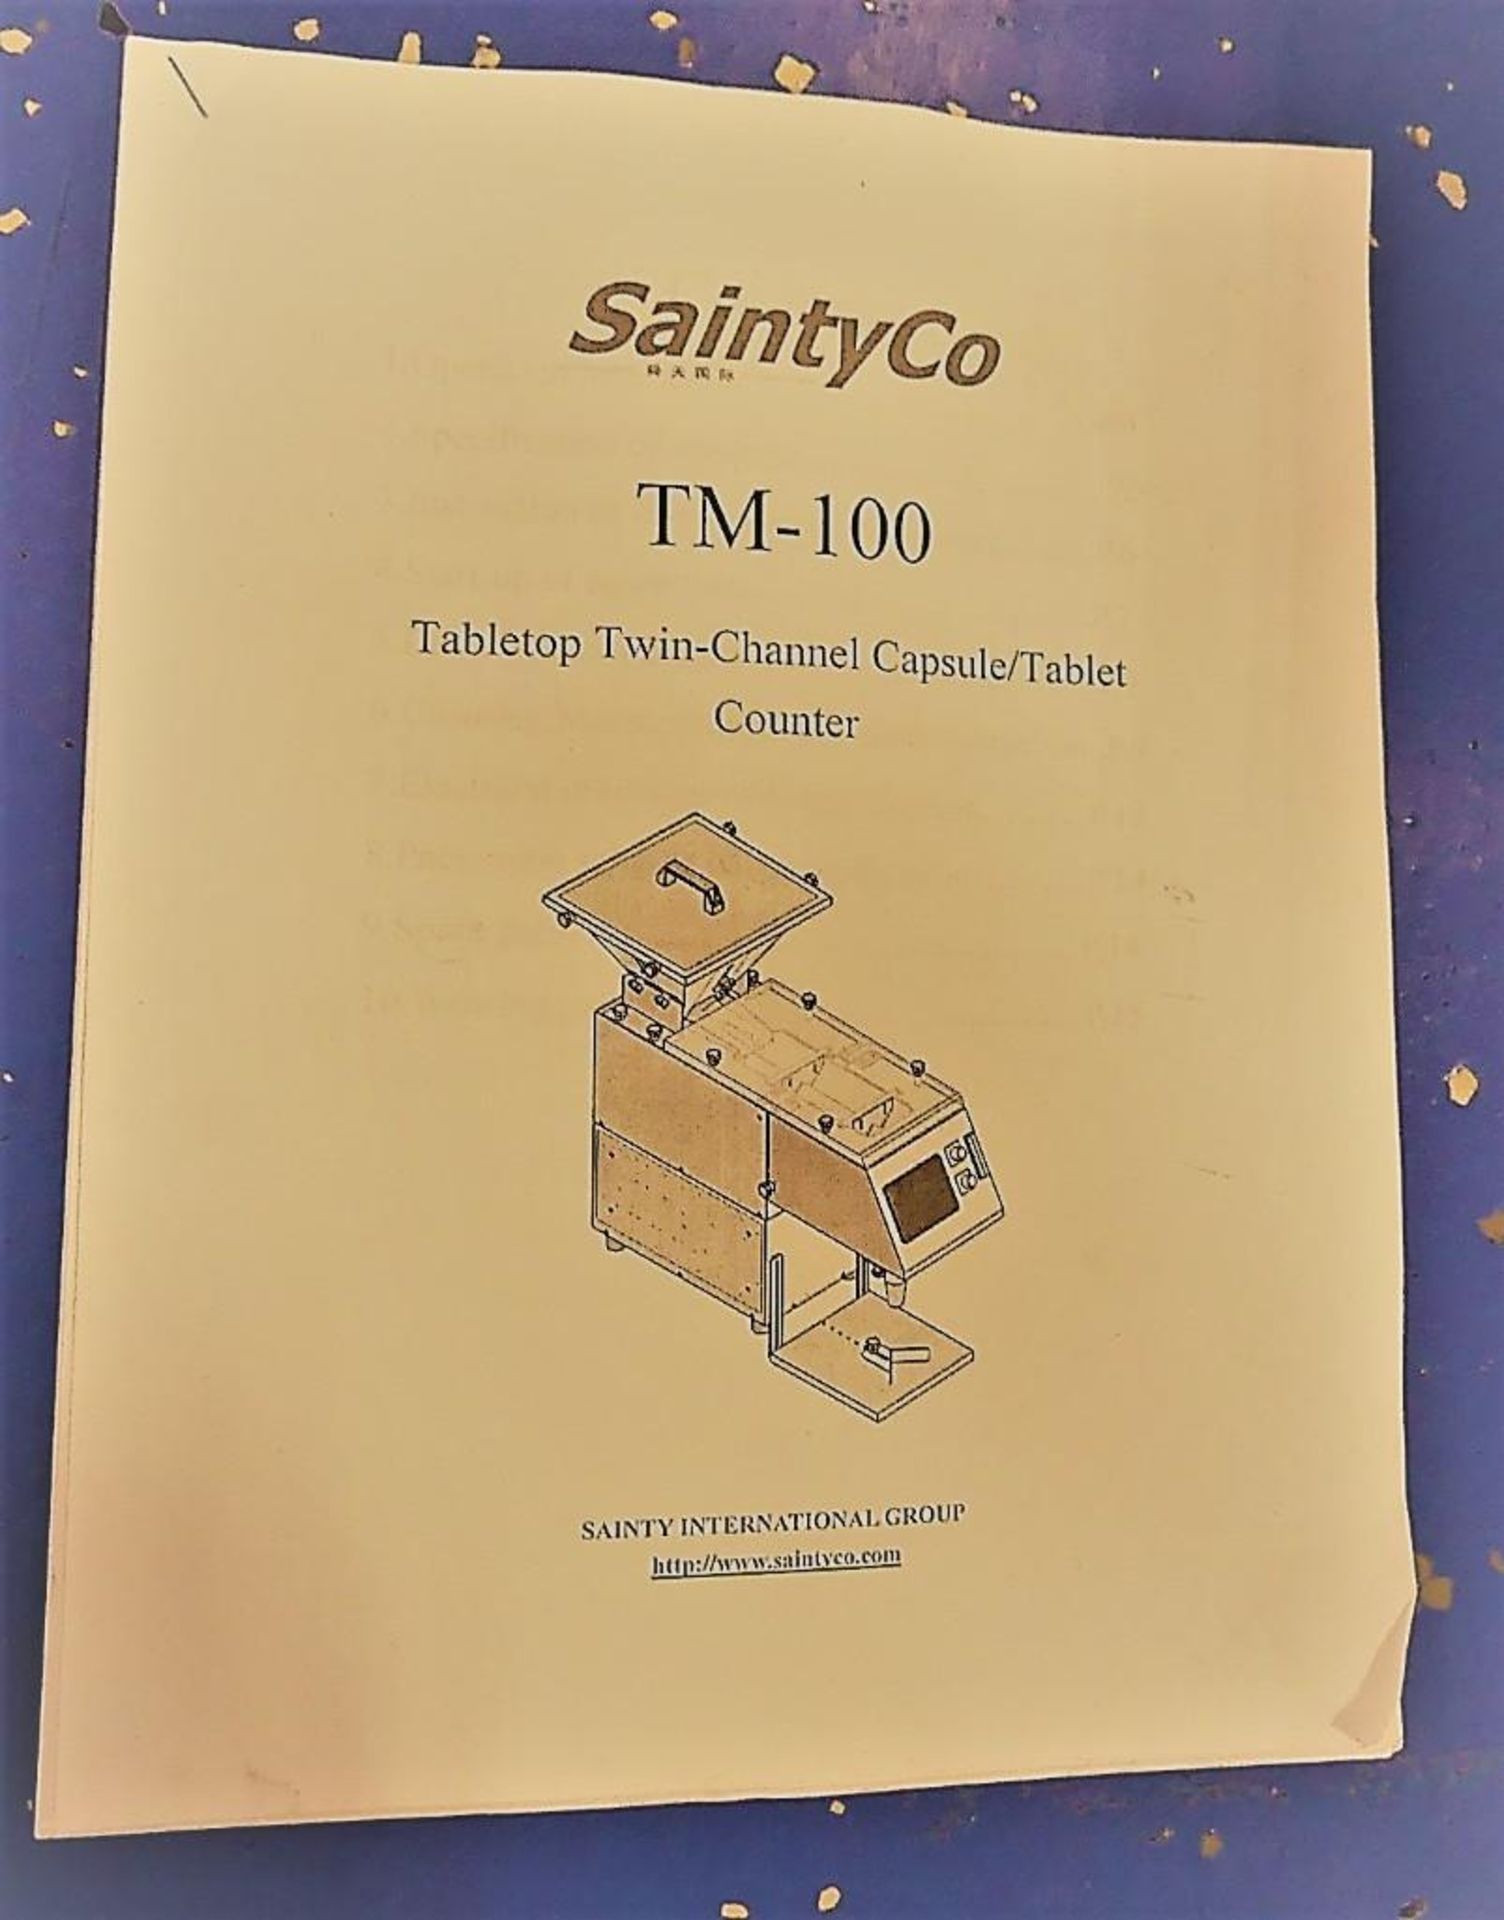 SaintyCo TM-100 Pill Counter - Image 6 of 7